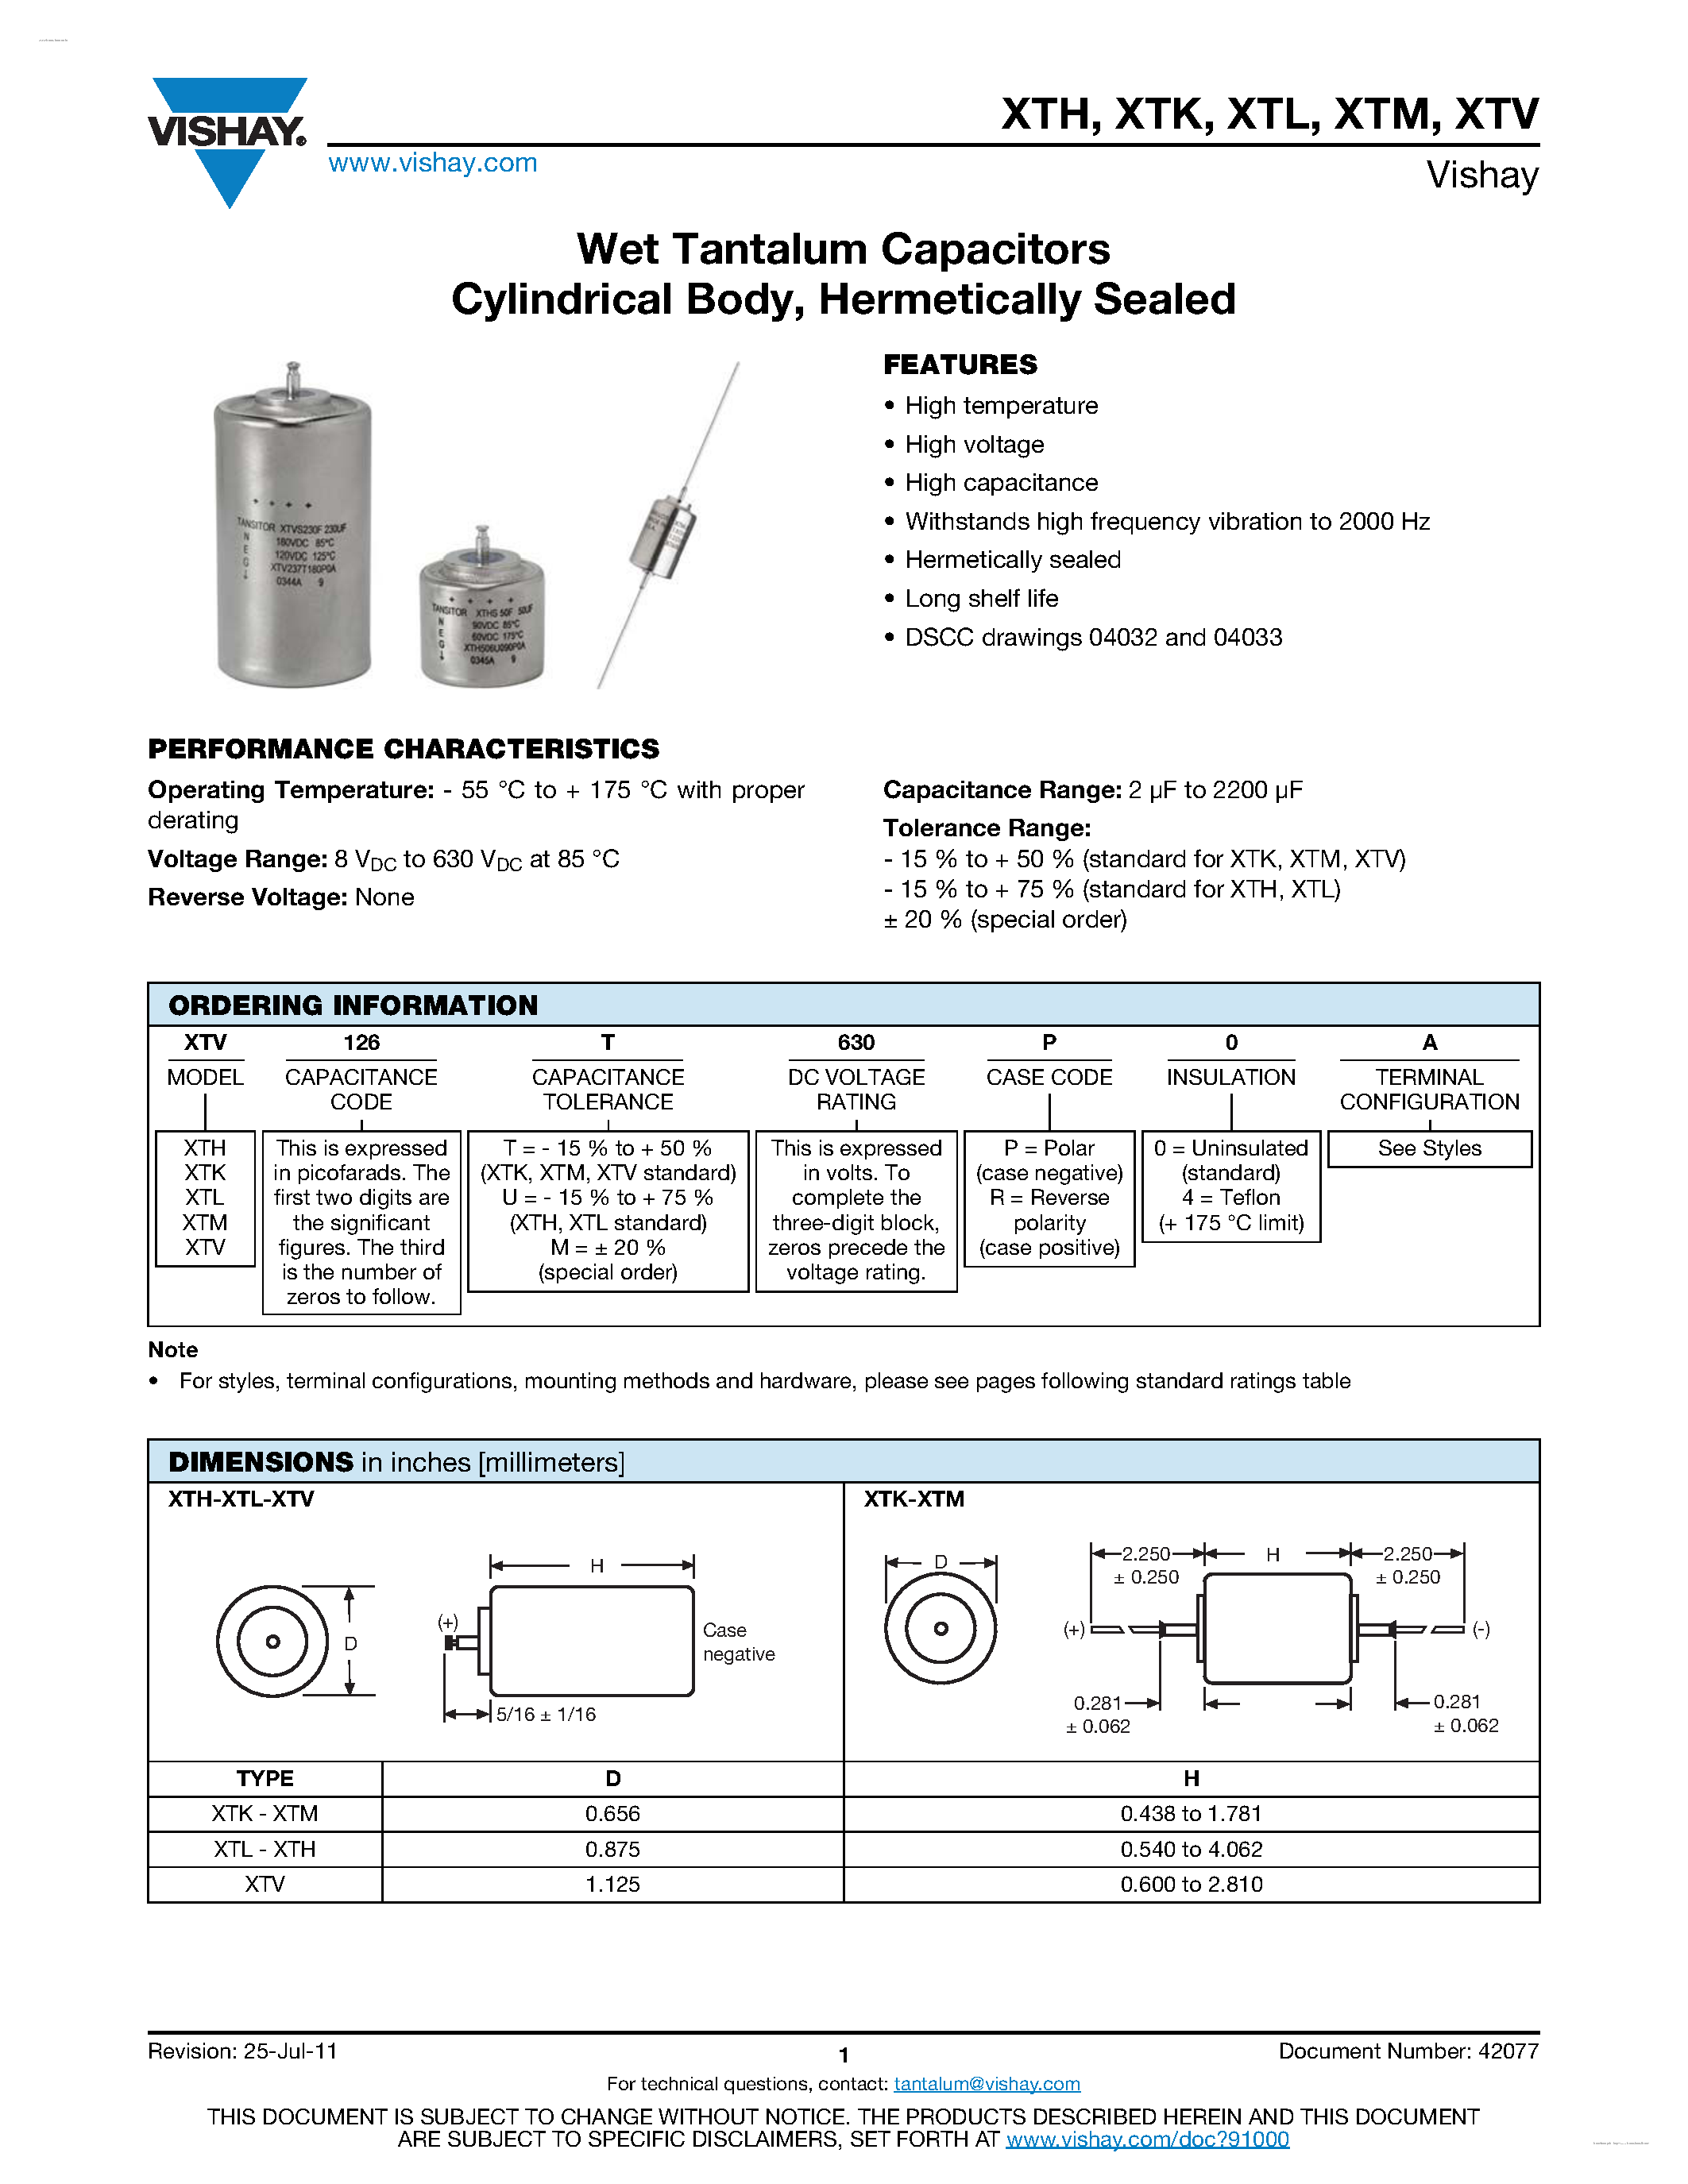 Datasheet XTL - Wet Tantalum Capacitors page 1